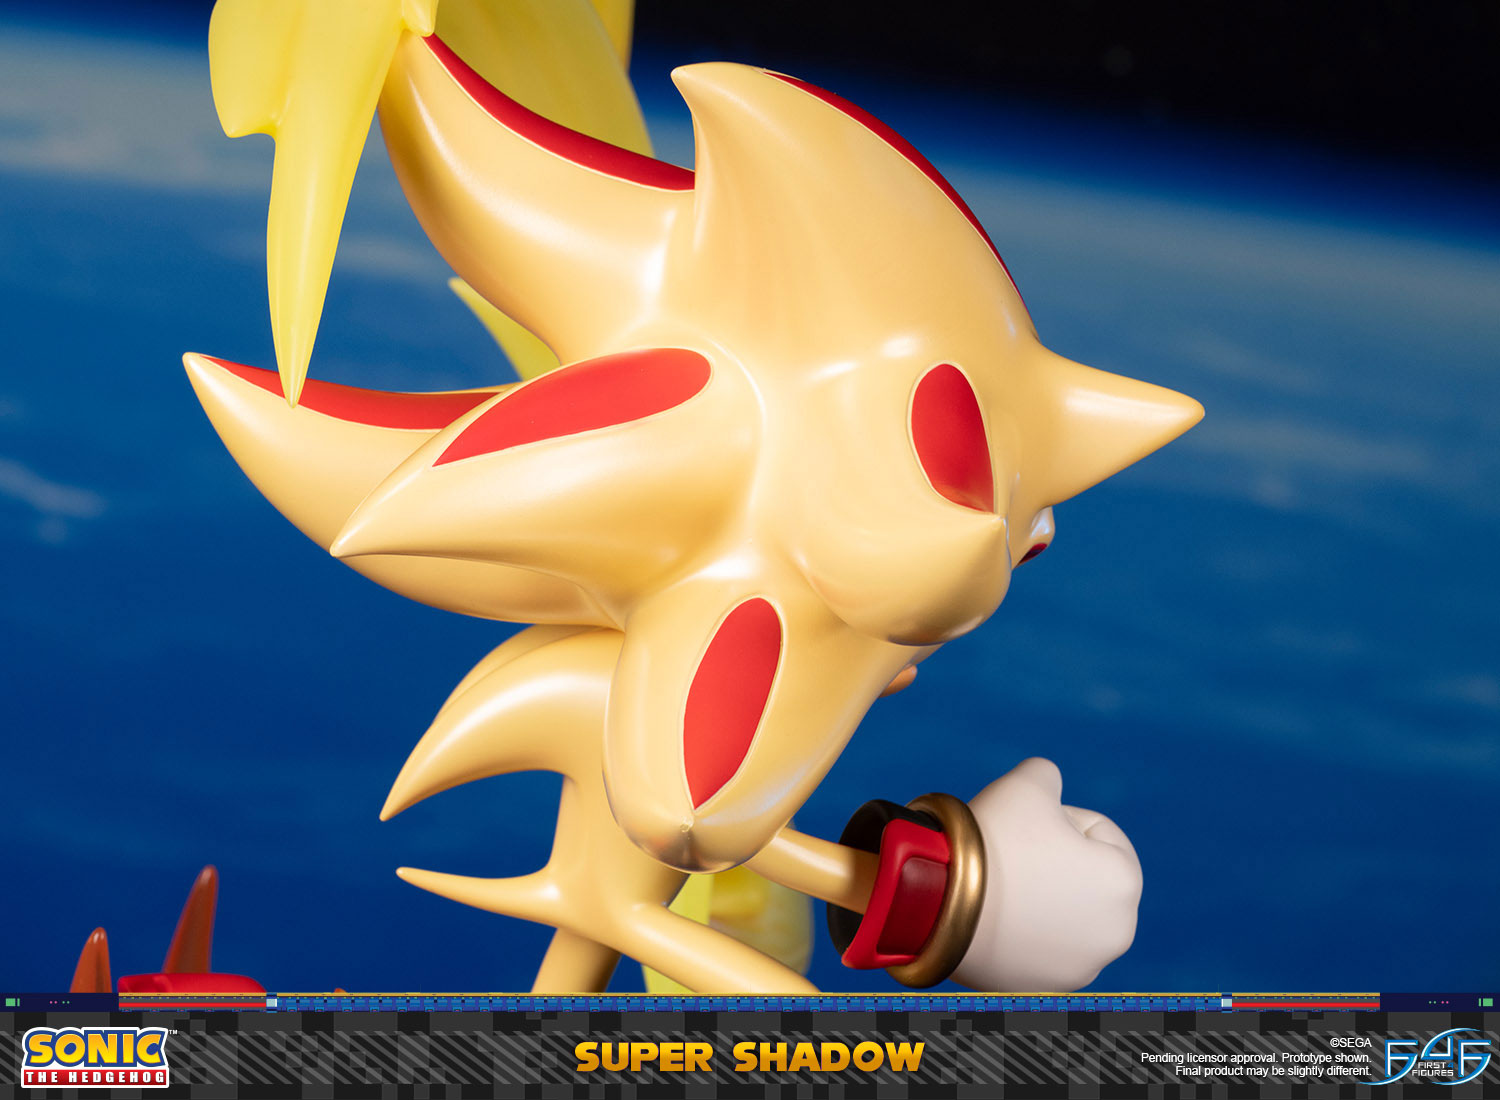 Super Shadow (Standard Edition)